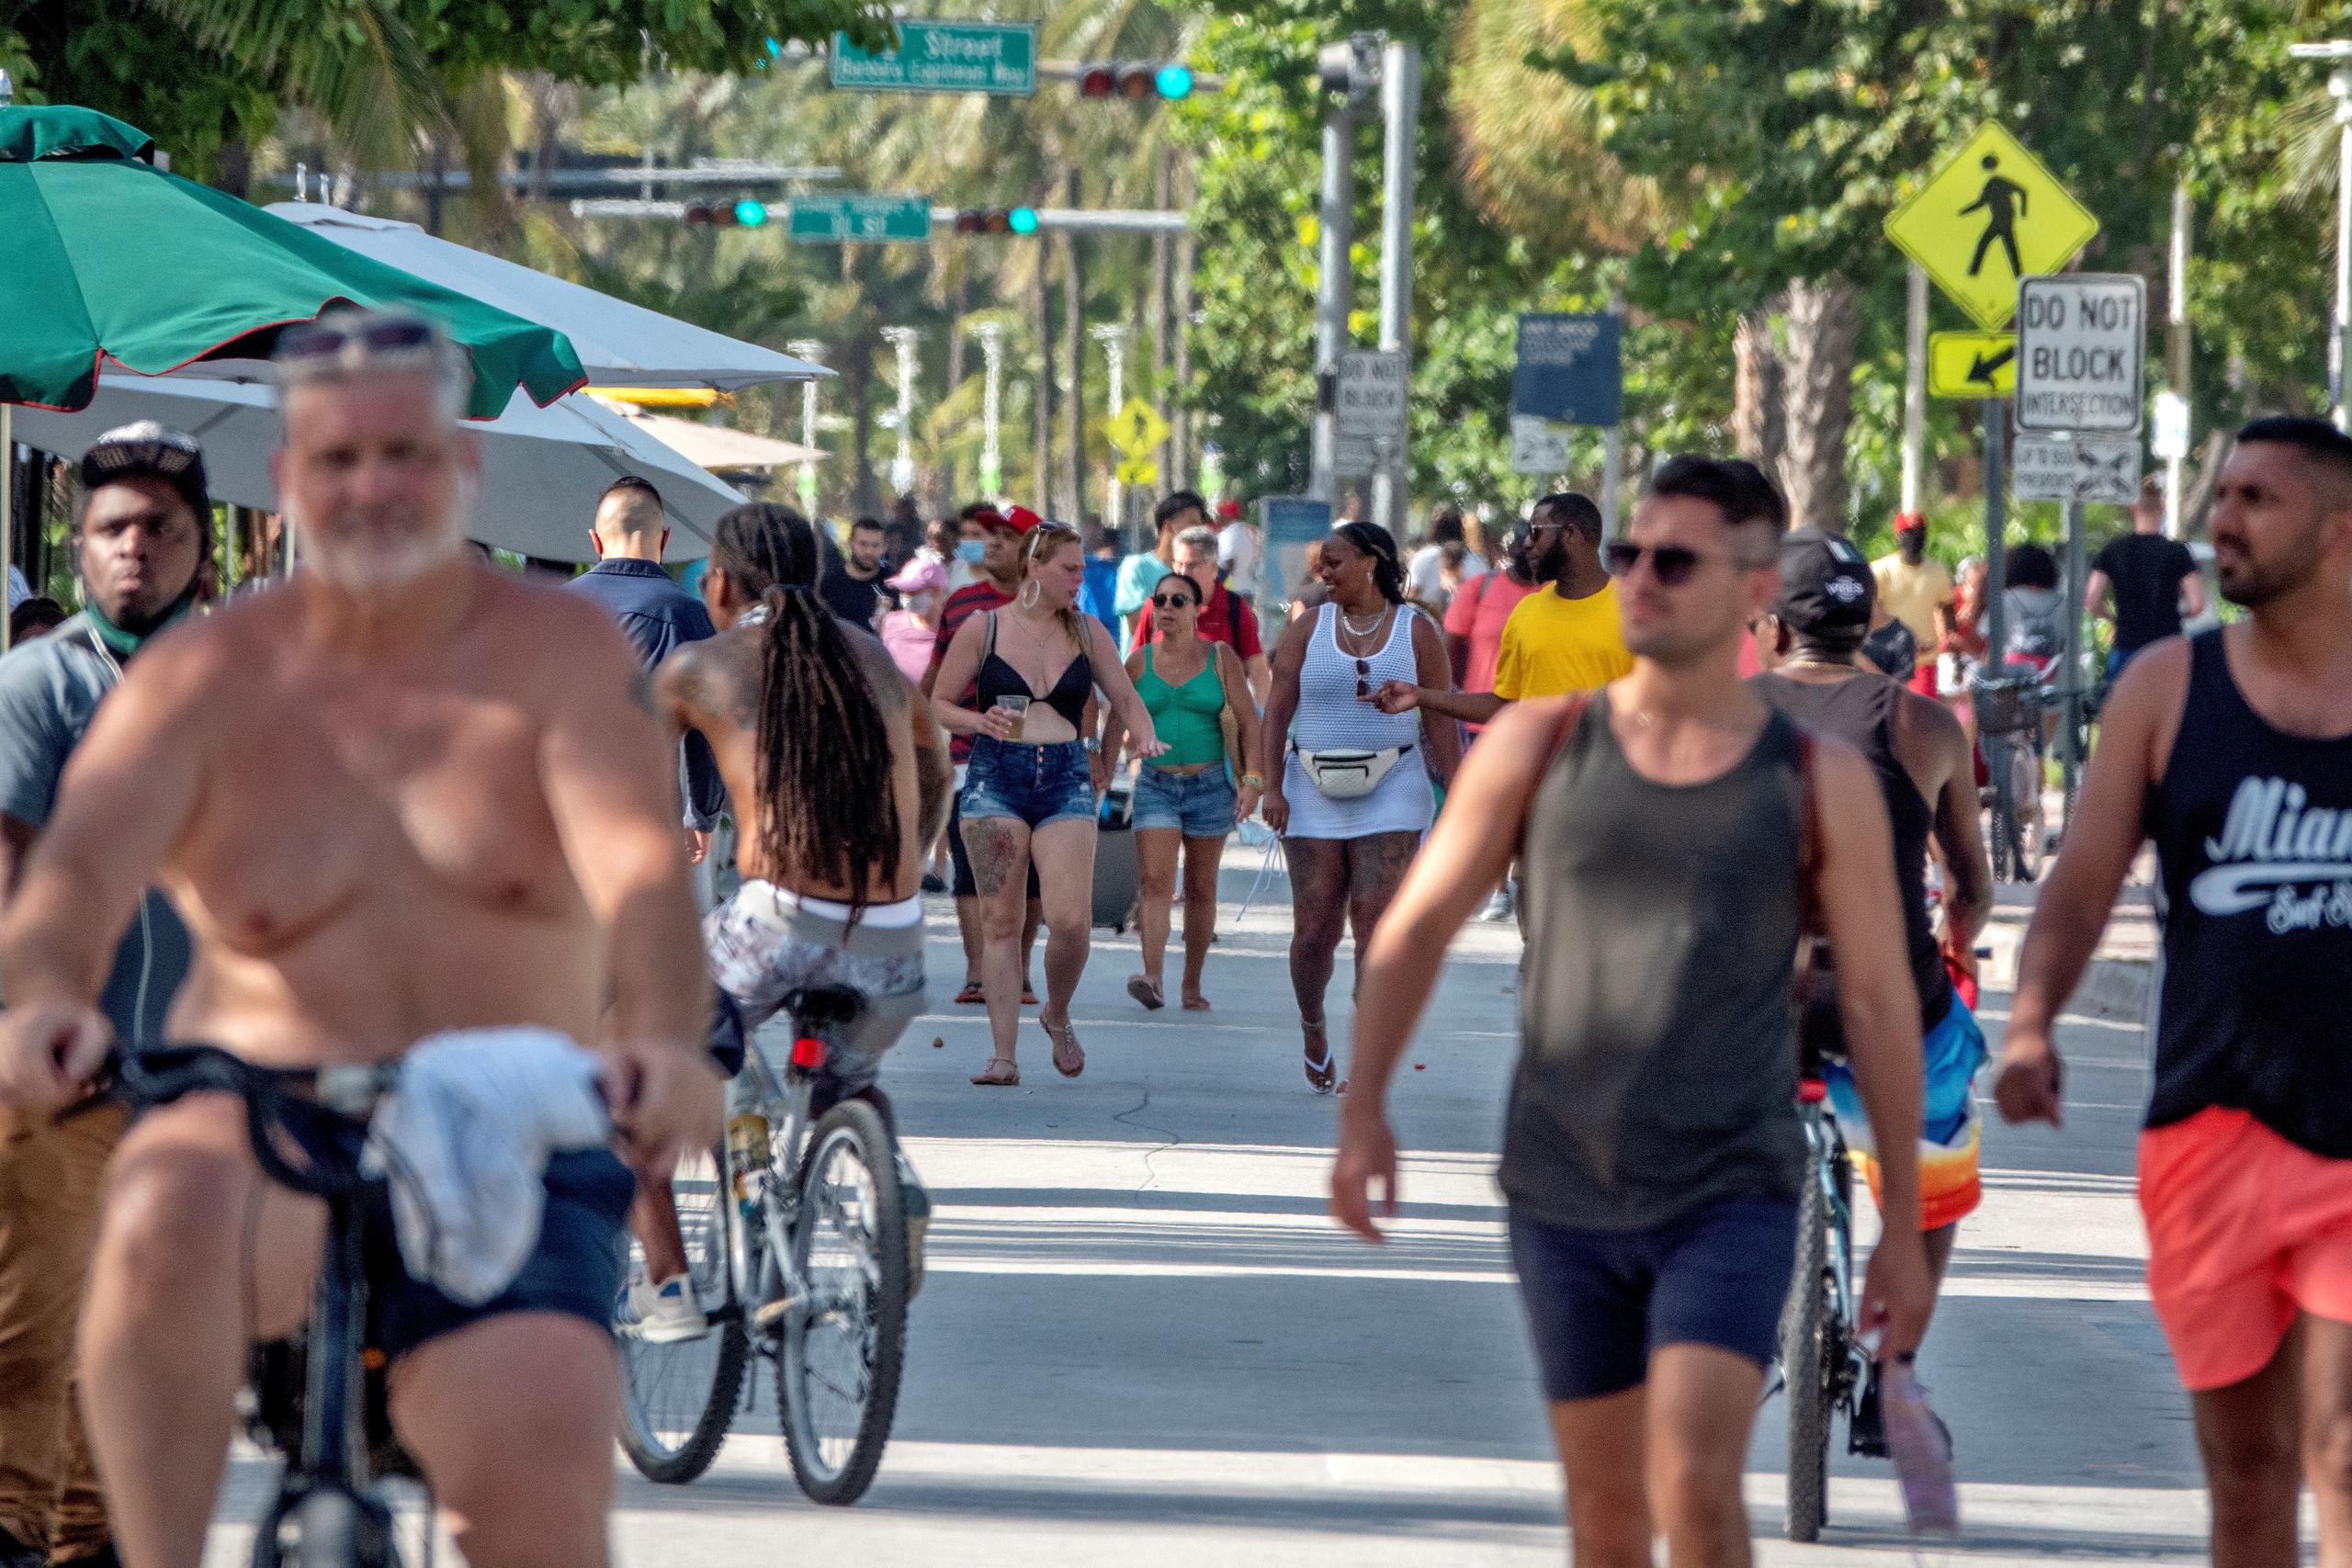 A group of people walk in Miami beach, Florida, USA, 26 June 2020. EFE/EPA/CRISTOBAL HERRERA
